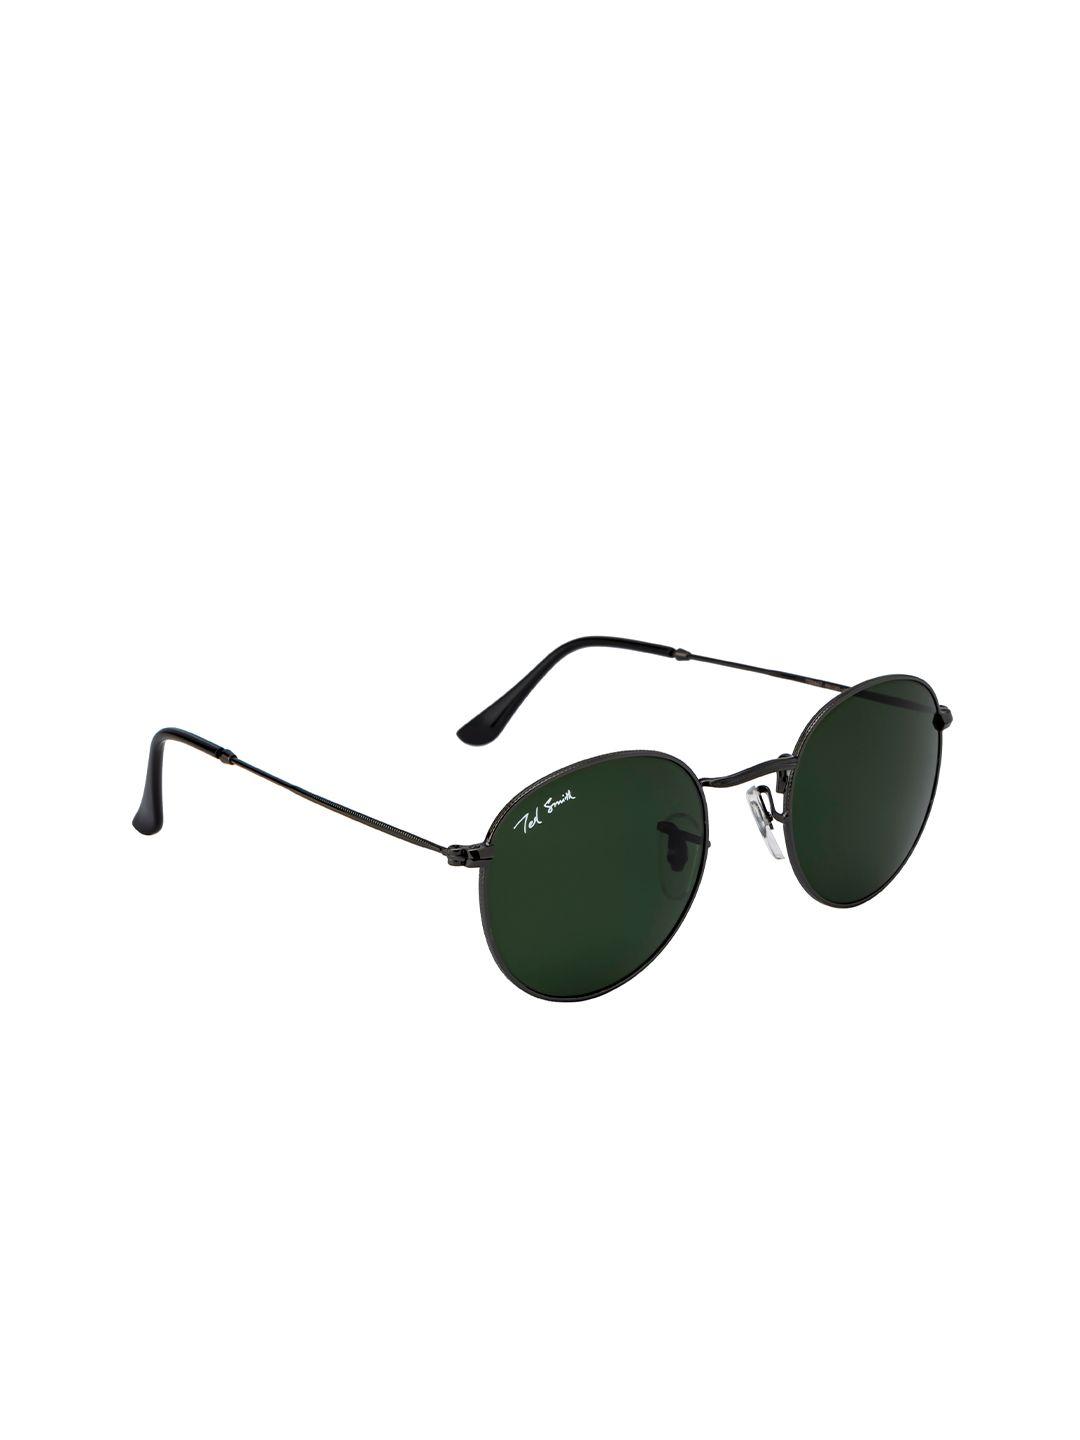 ted smith unisex green lens & black round sunglasses moon_c10